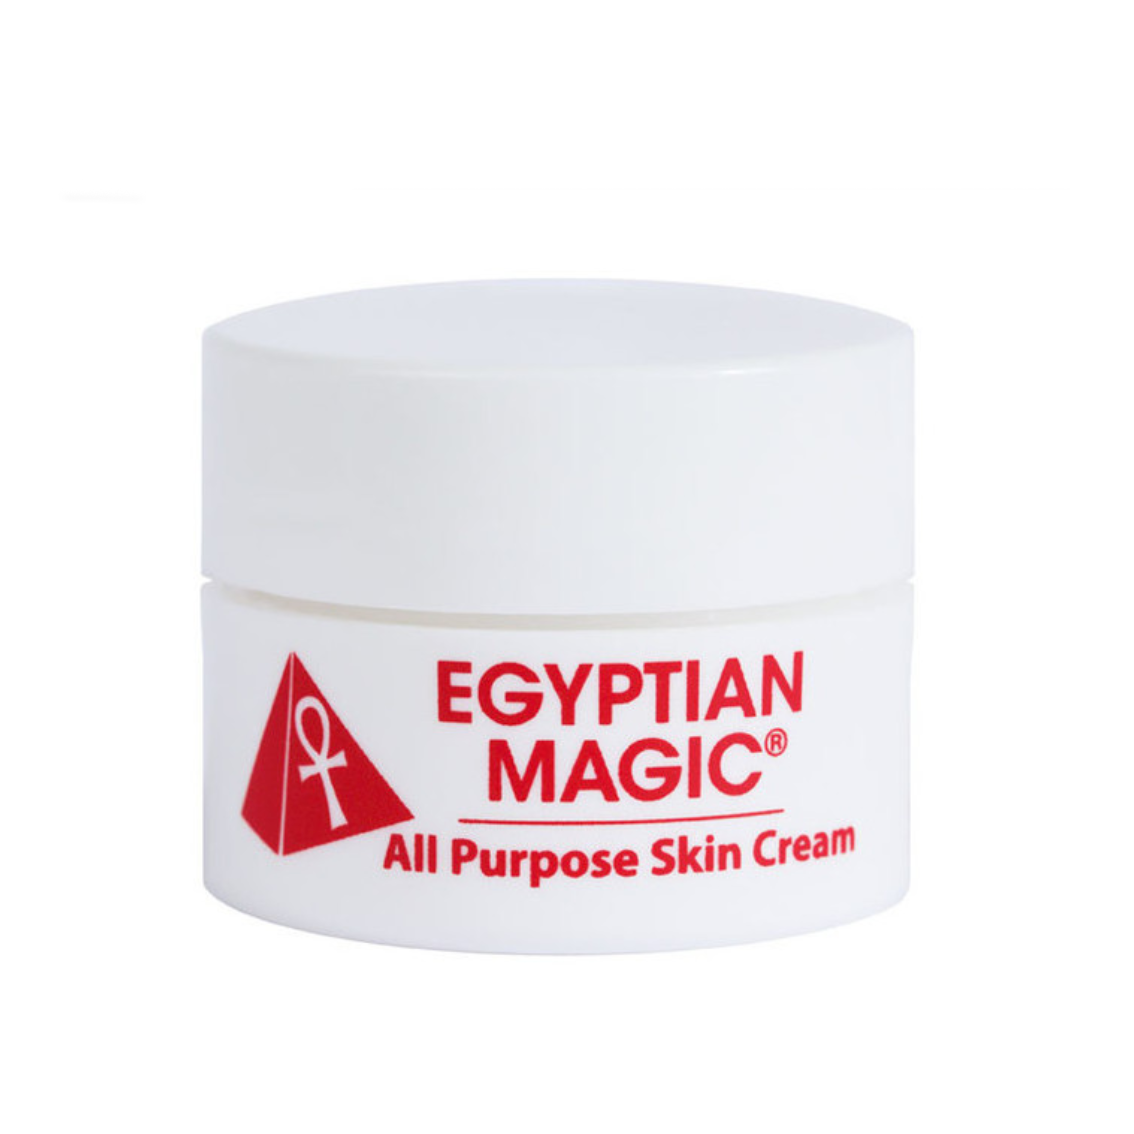 Egyptian Magic All Purpose Skin Cream - 1 oz. Jar